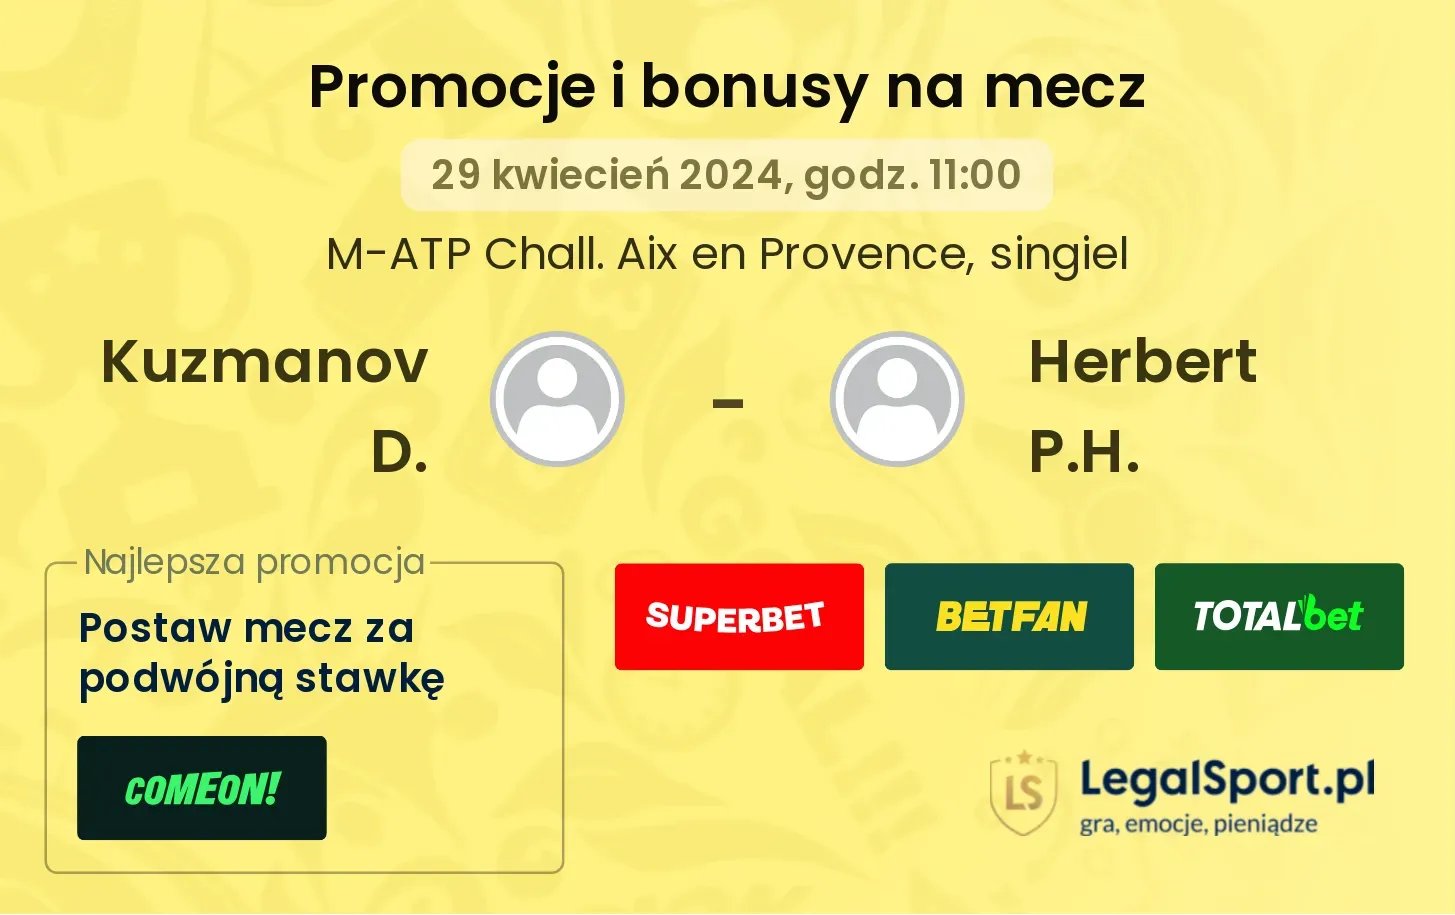 Kuzmanov D. - Herbert P.H. promocje bonusy na mecz